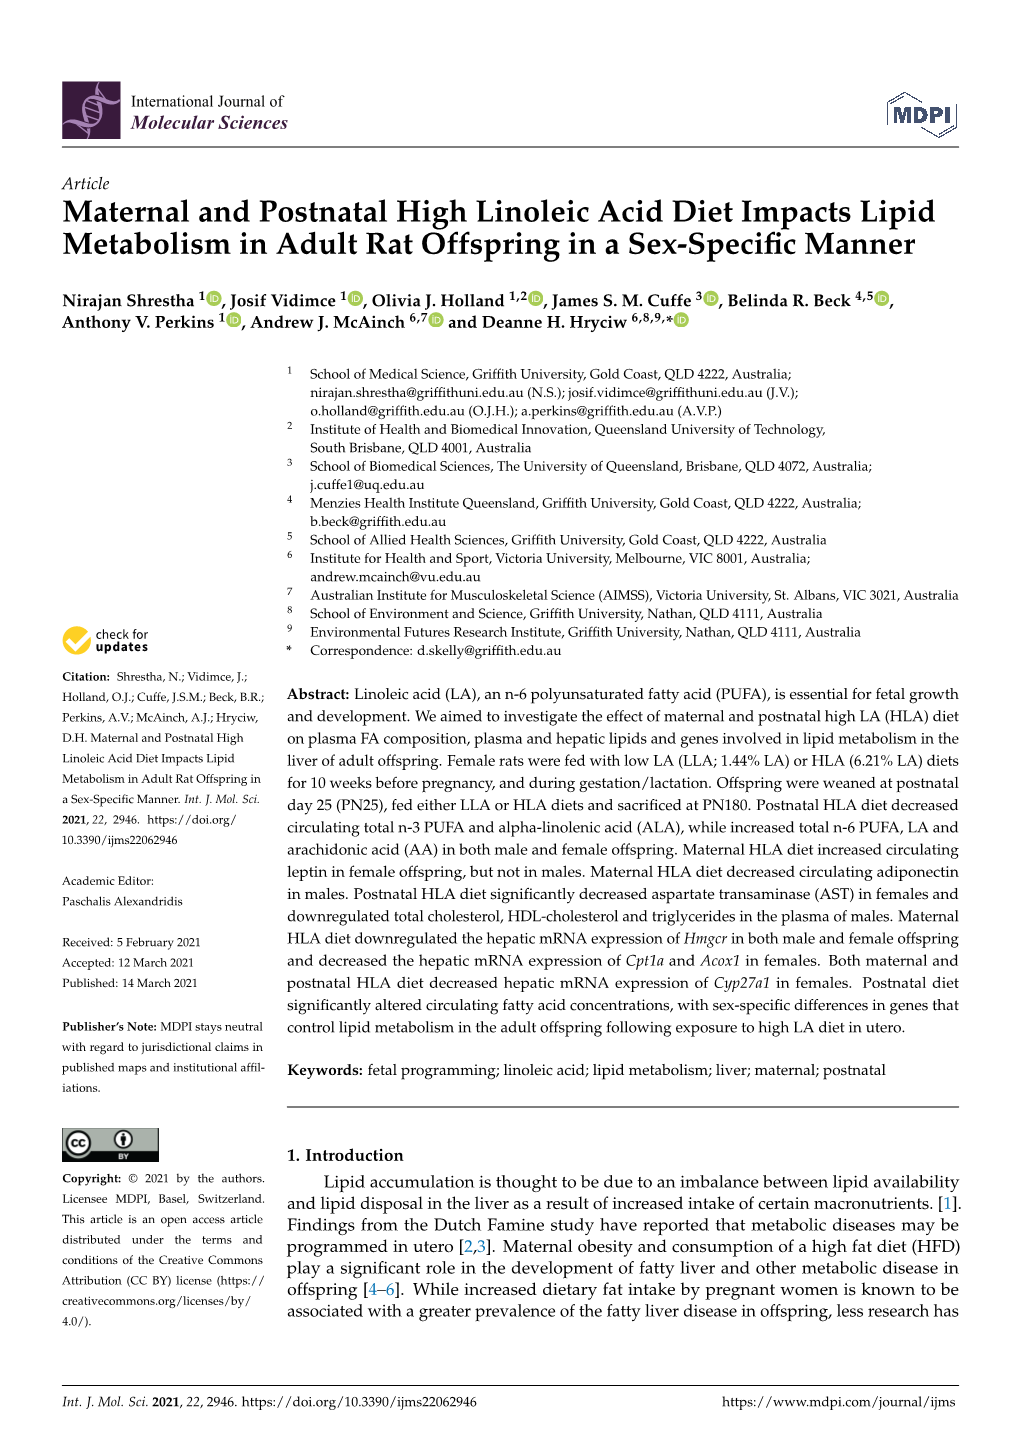 Maternal and Postnatal High Linoleic Acid Diet Impacts Lipid Metabolism in Adult Rat Offspring in a Sex-Speciﬁc Manner